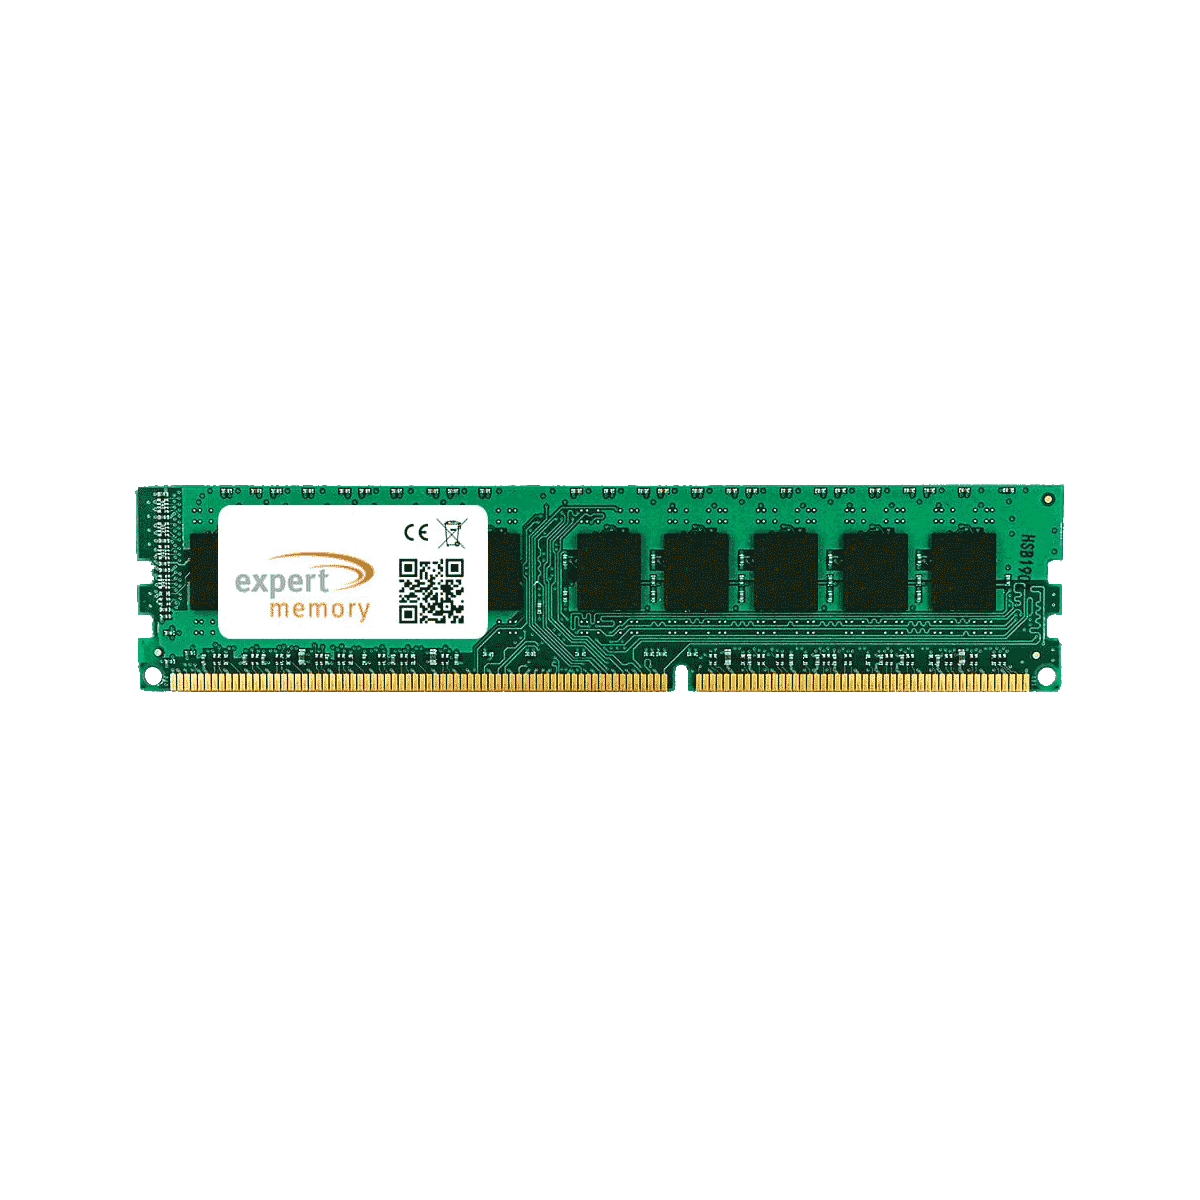 GB (1018474) Memory Upgrade DDR3 PC Basic EXPERT 5000 Tarox 4 MEMORY RAM 4GB